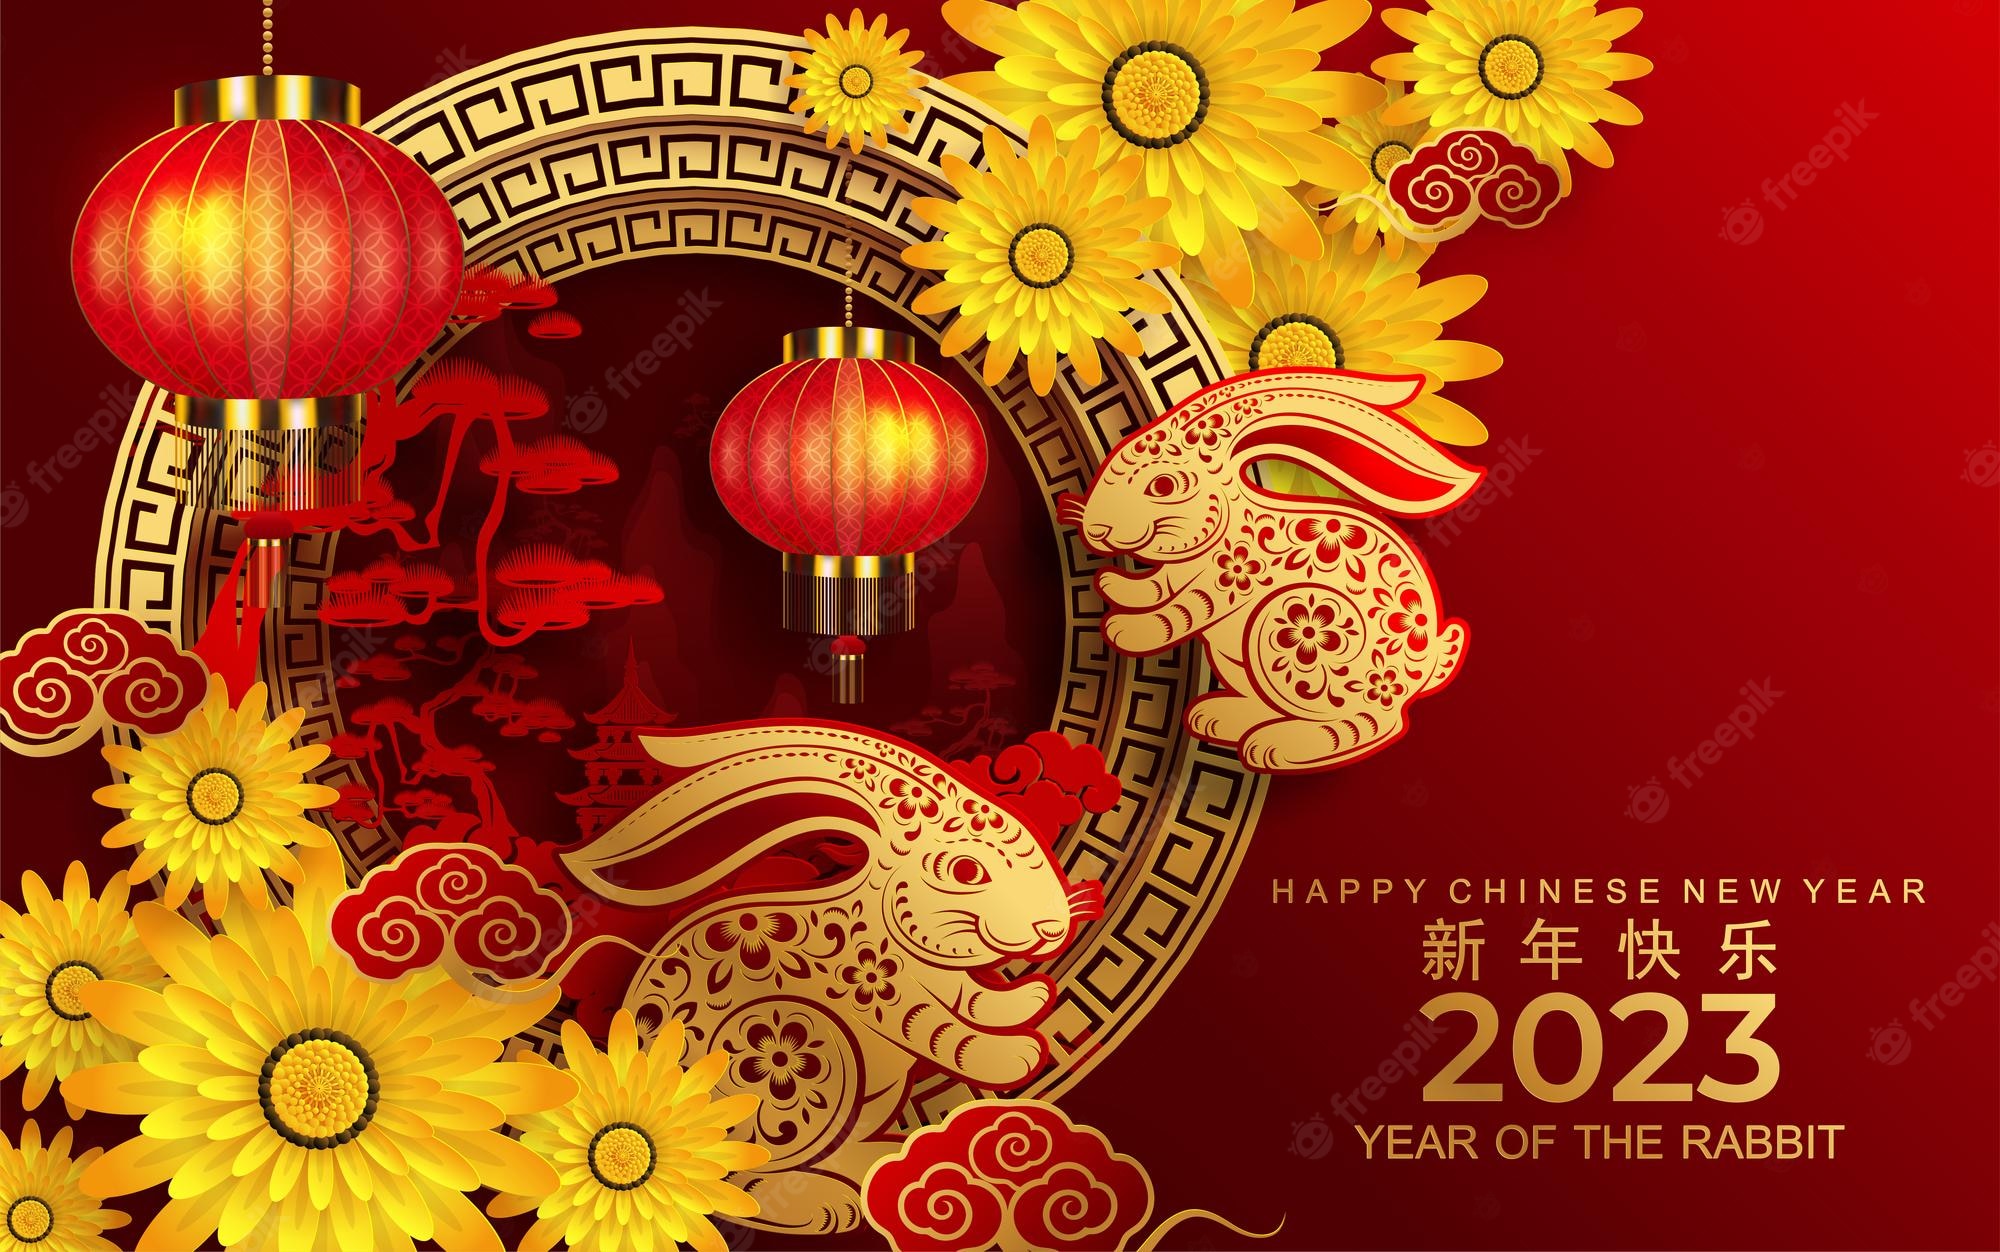 Lunar New Year 2023 Free Printable